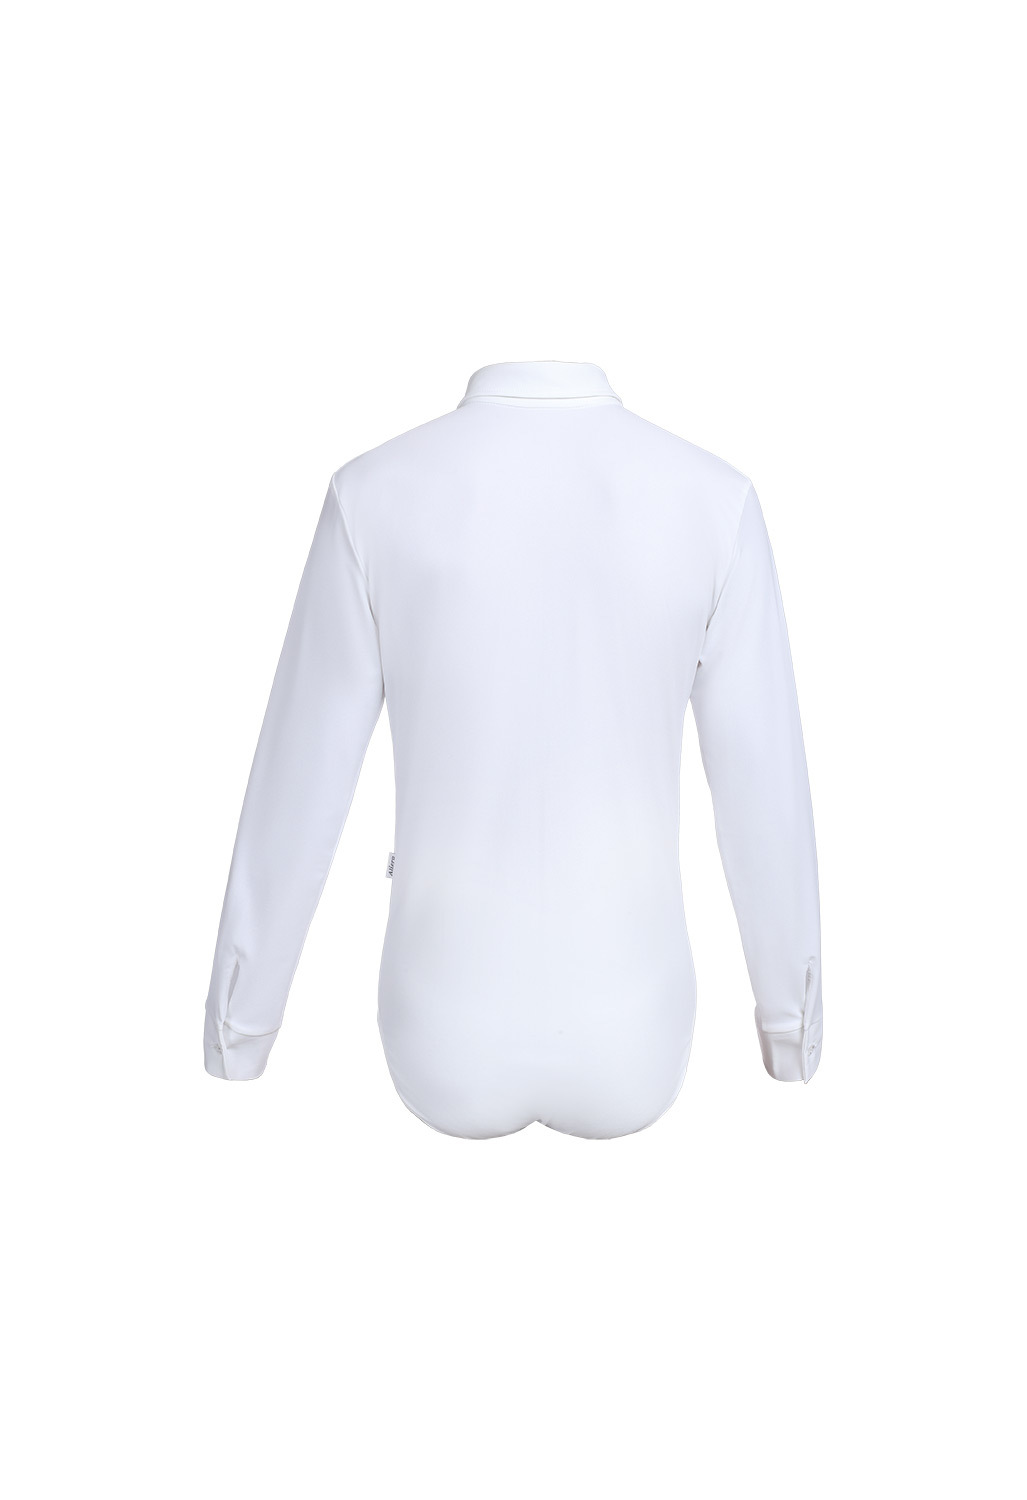 Боди-рубашка белая от интернет магазина ТДФК-ЮГ-ТВИЗЛ